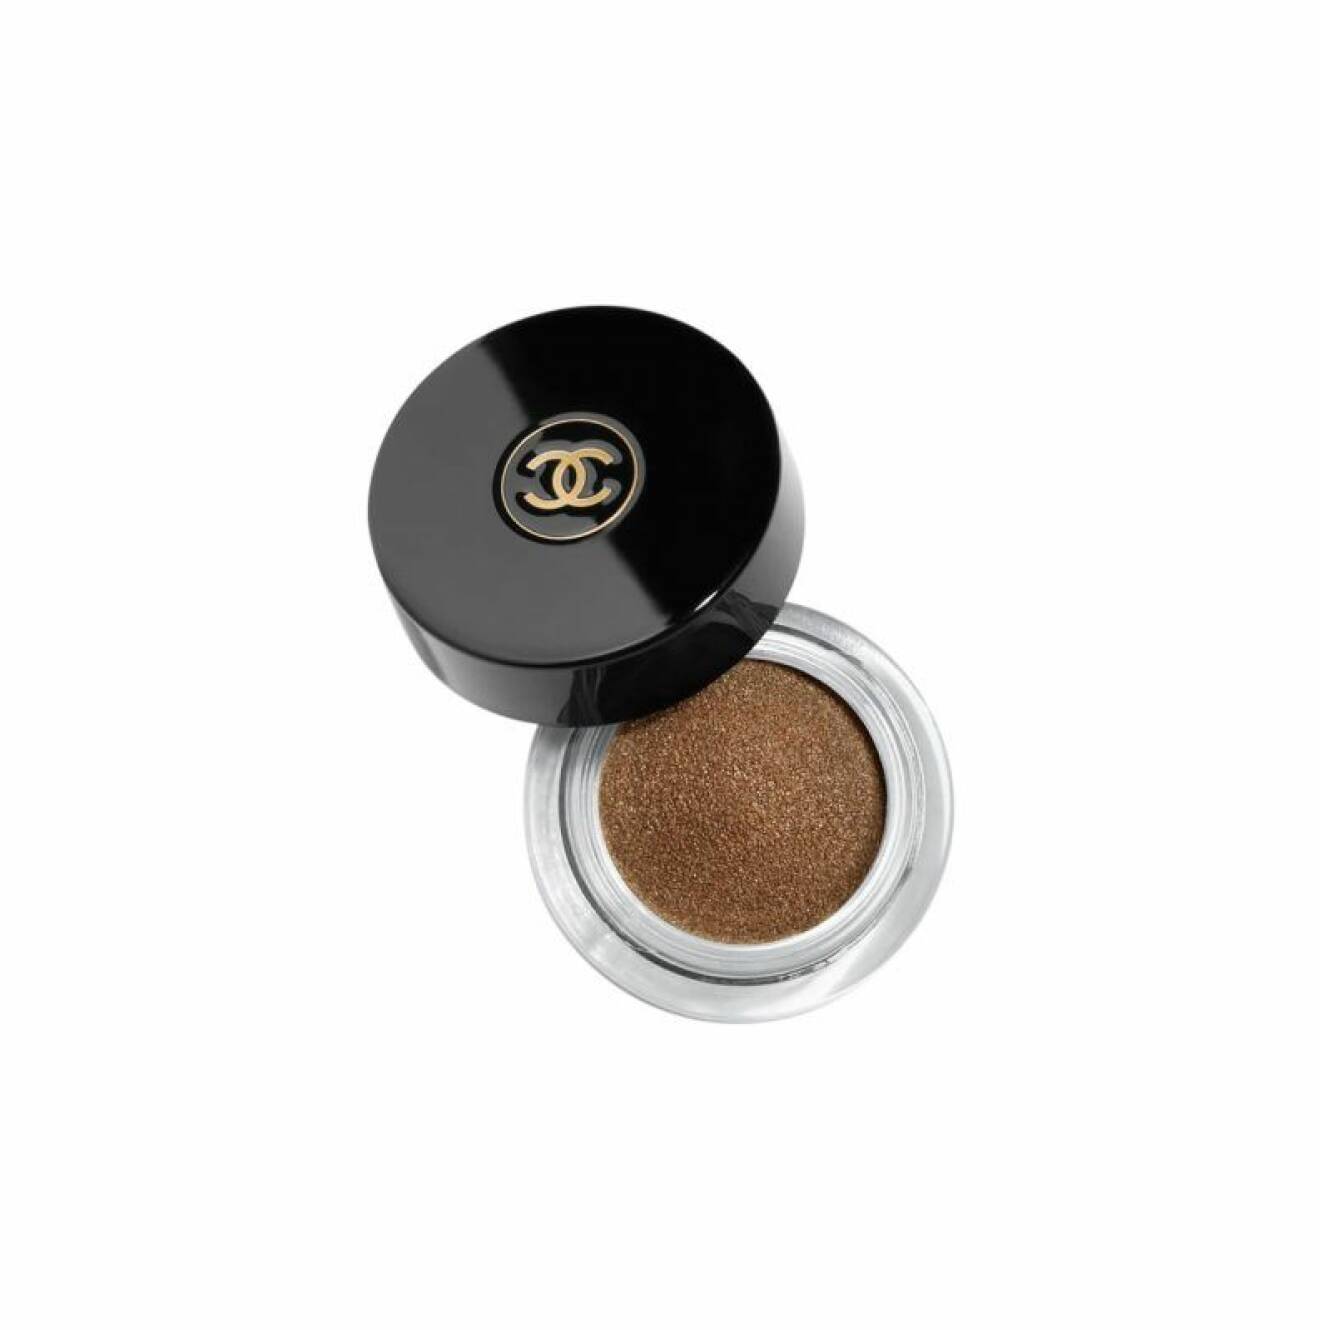 Ögonskugga Longwear cream eyeshadow i Patine bronze nr 840 från Chanel